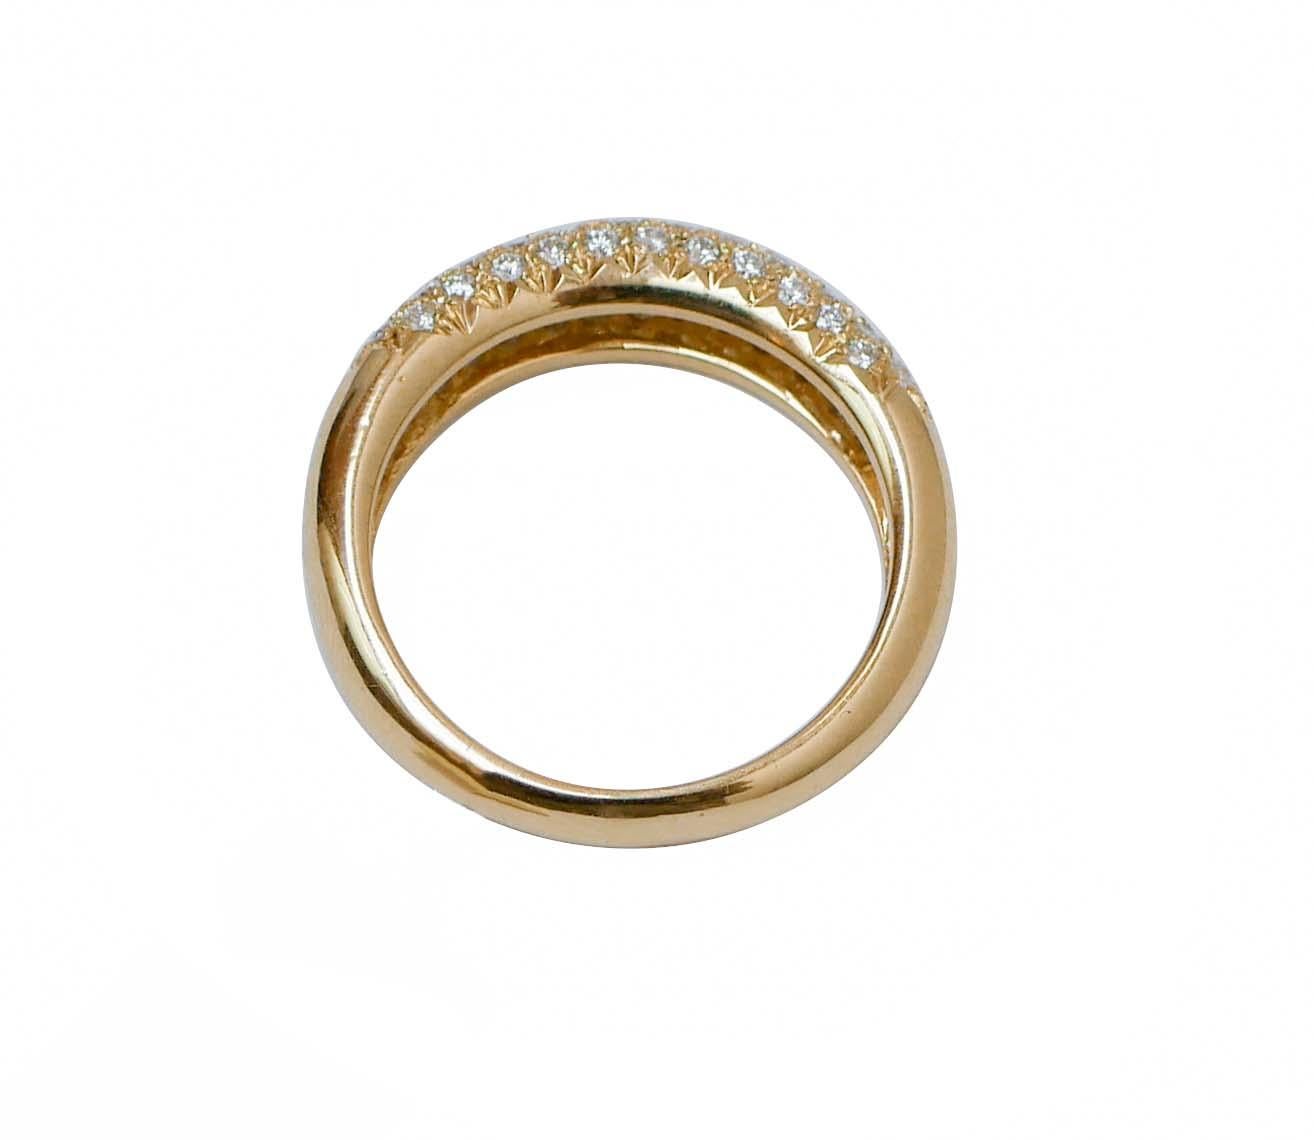 Modern Diamonds, 18 Karat Yellow Gold Ring. For Sale